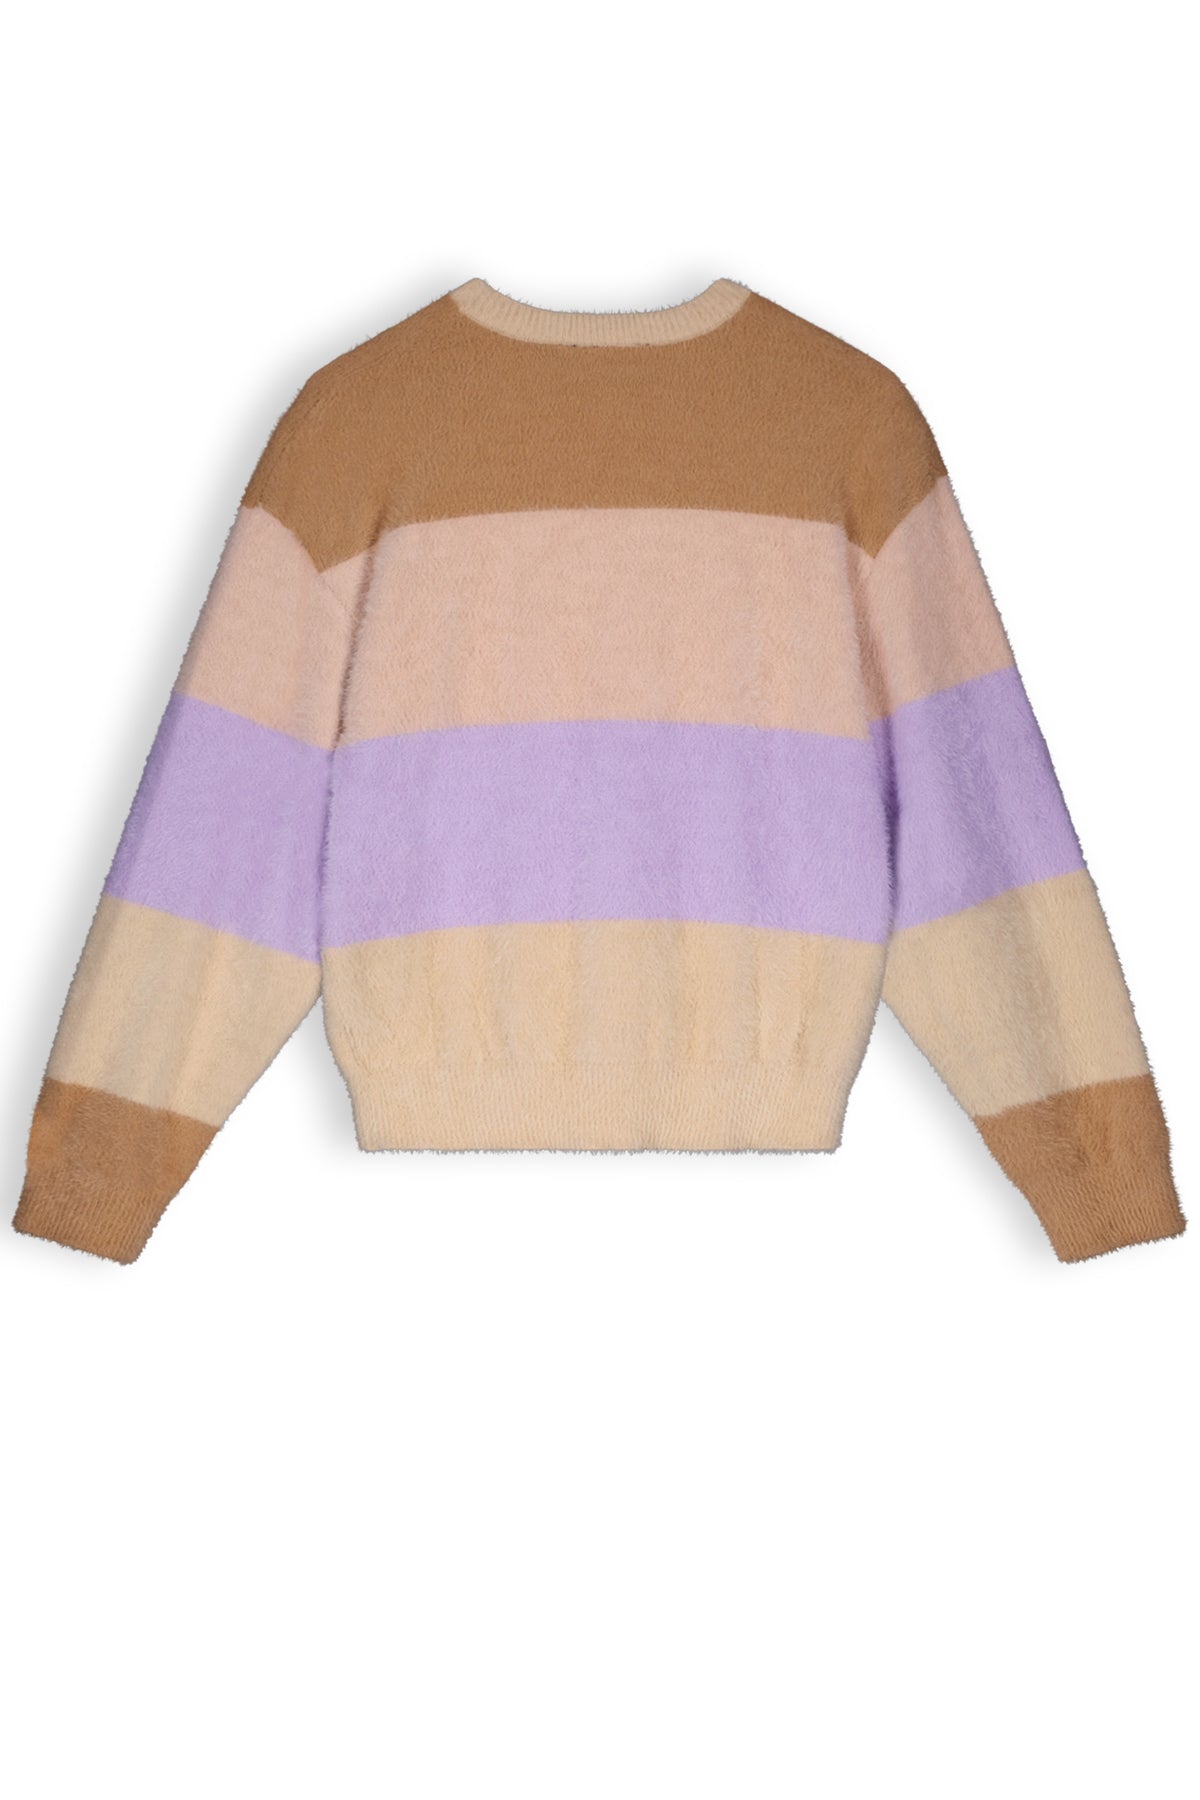 Meisjes Kes girls blocked striped knitted sweater lilac van NoBell in de kleur Lupine Lilac in maat 170-176.